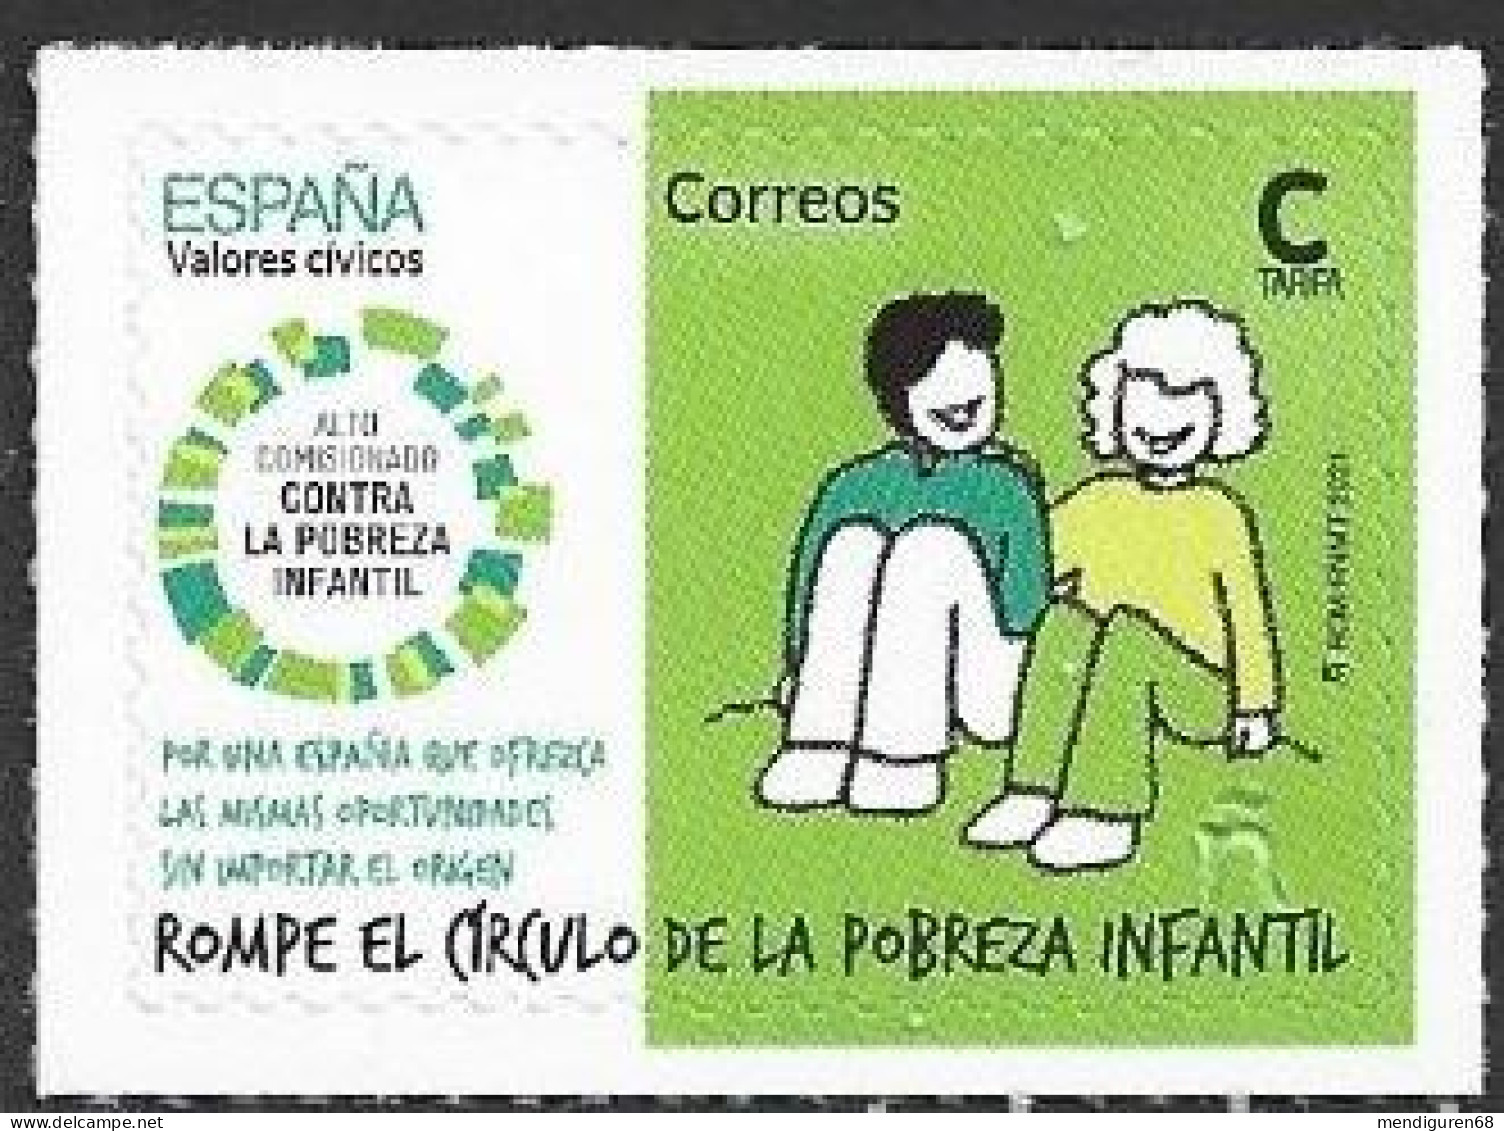 ESPAGNE SPANIEN SPAIN EPAÑA 2021 CIVIC VALUES: AGAINST CHILD POVERTY PROBEZA INFANTIL  ED 5486 MI 5536 YT 5241 SC 4515 - Neufs